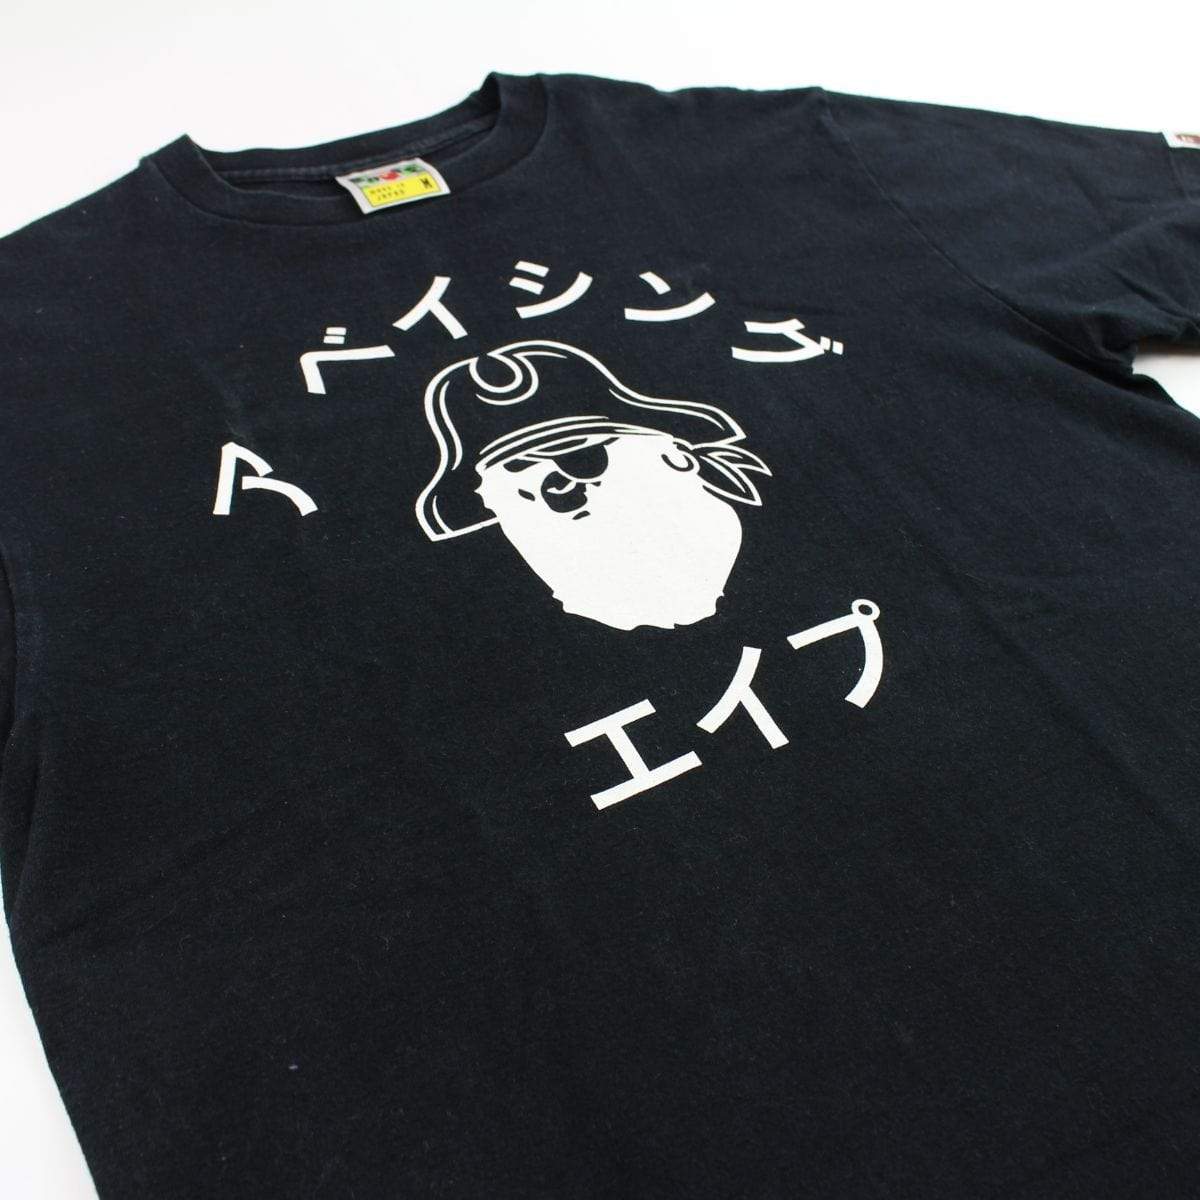 Bape Pirate Store Katakana college logo Tee Black - SaruGeneral